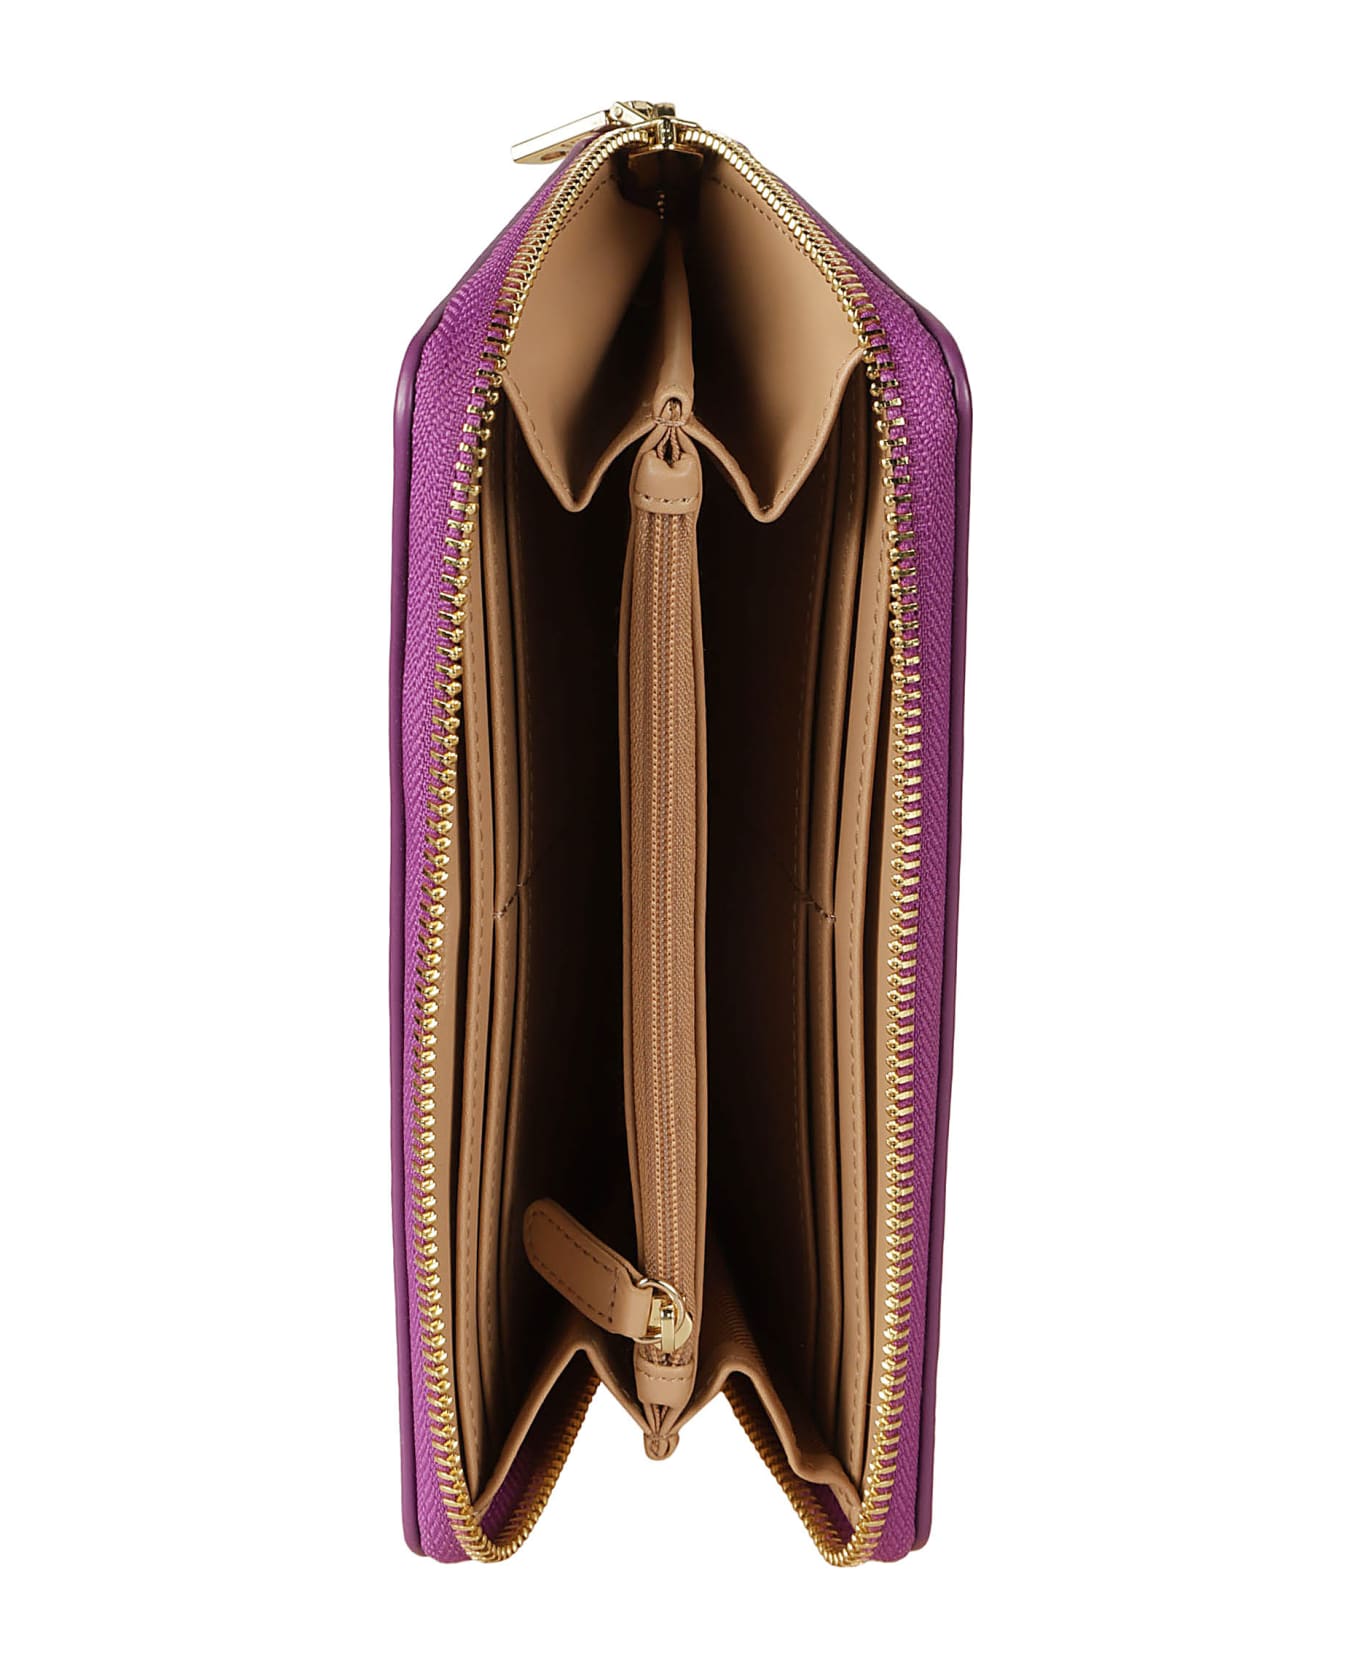 Love Moschino Logo Plaque Quilted Zip-around Wallet - Purple 財布